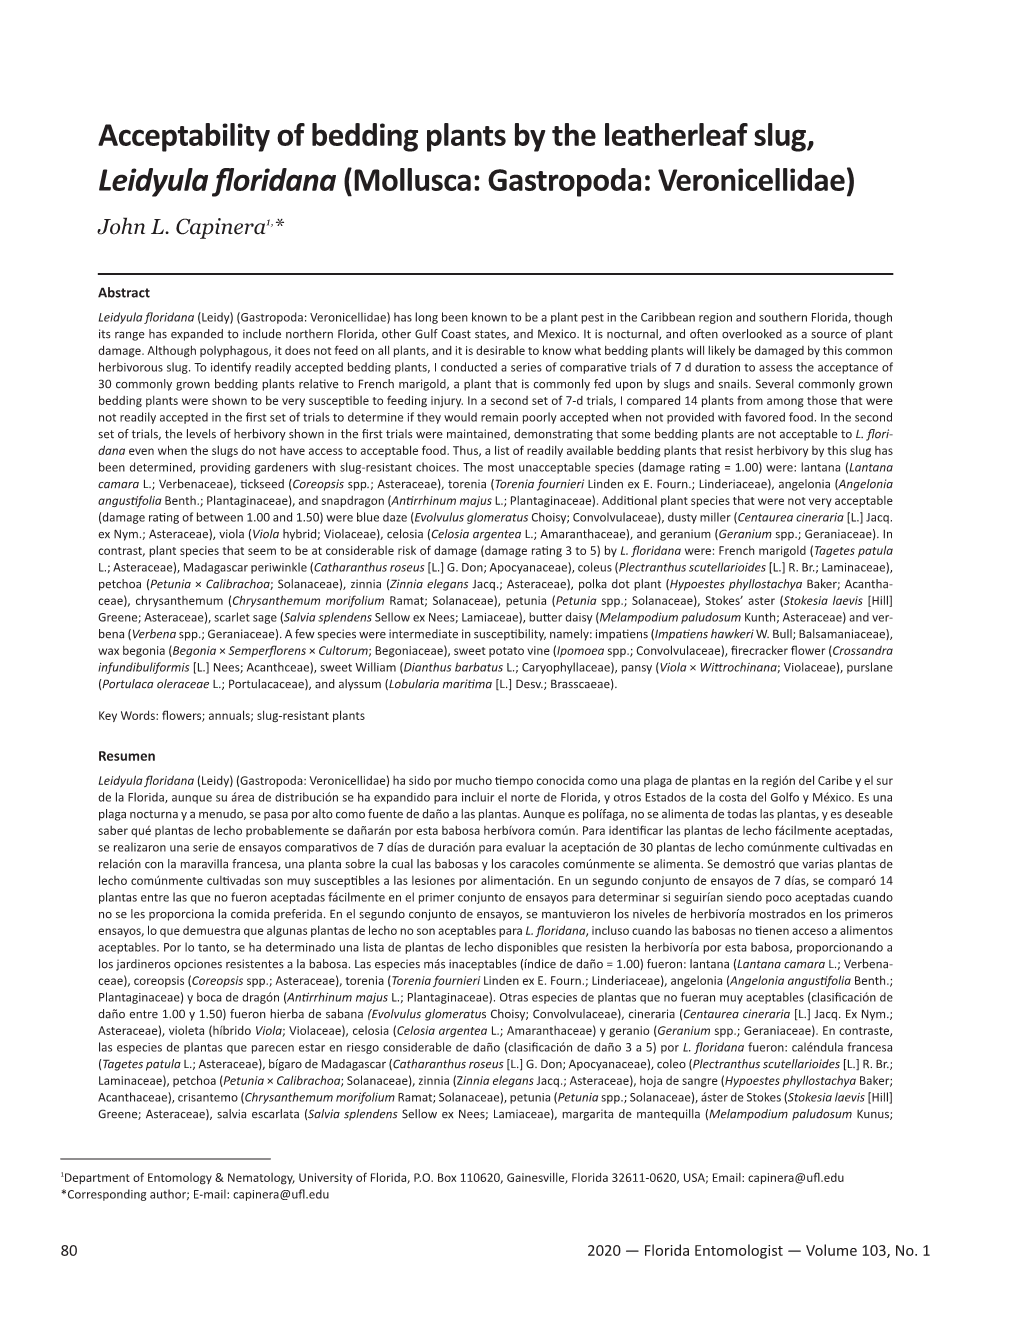 Acceptability of Bedding Plants by the Leatherleaf Slug, Leidyula Floridana (Mollusca: Gastropoda: Veronicellidae)